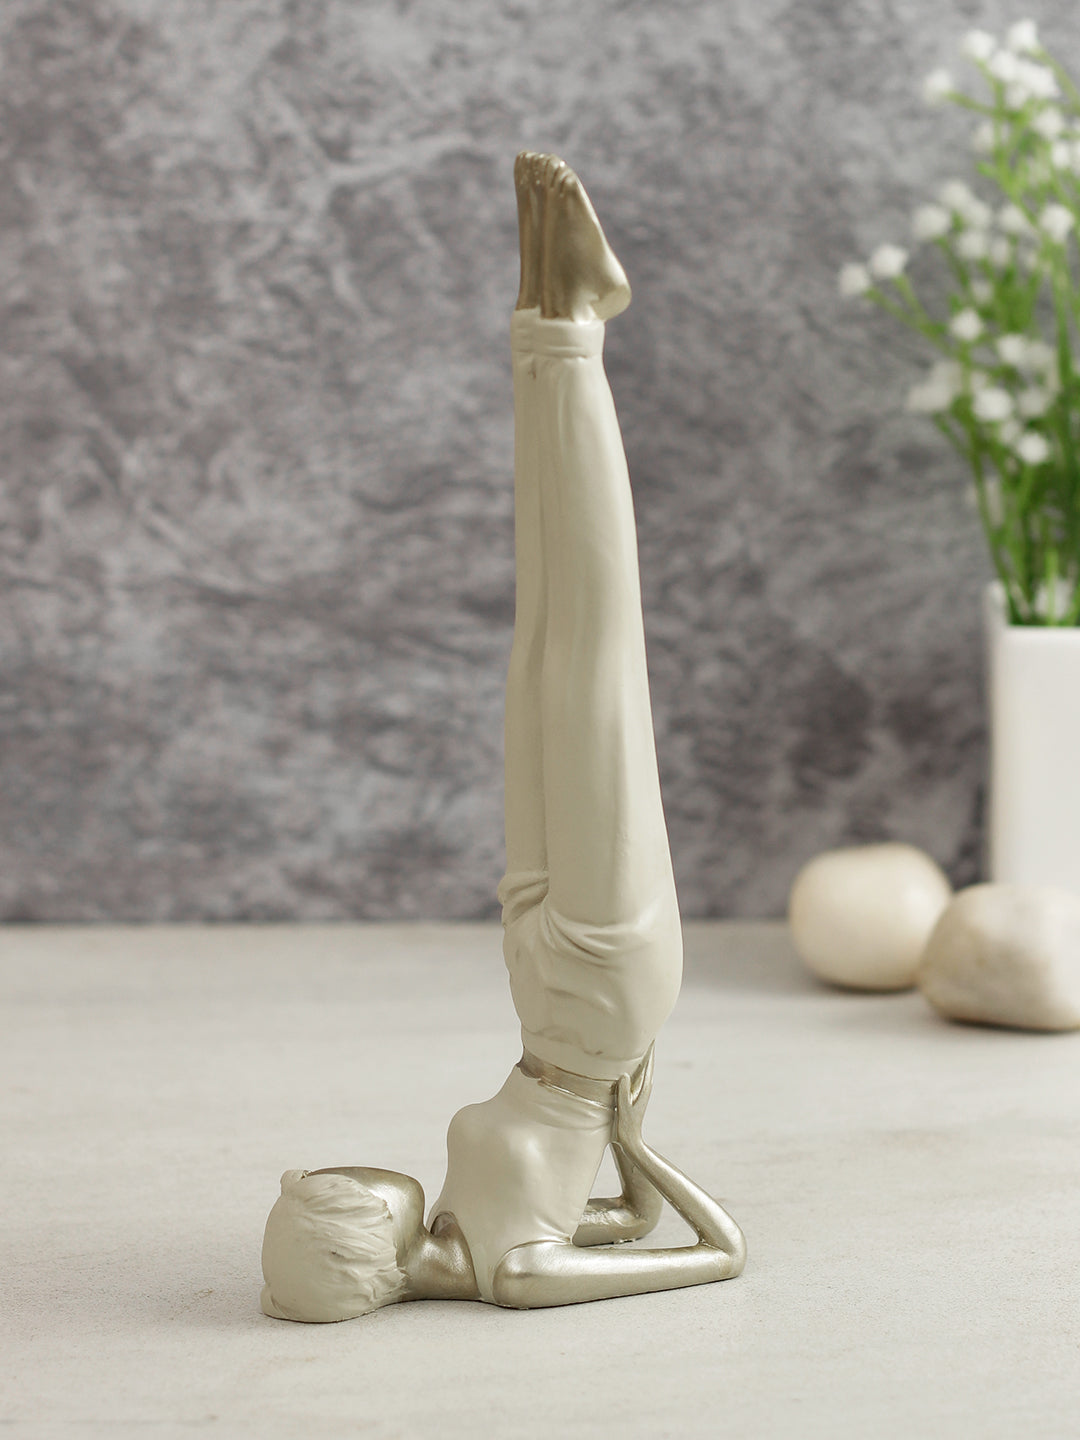 Healthy Yoga Pose Figurine in Raisin